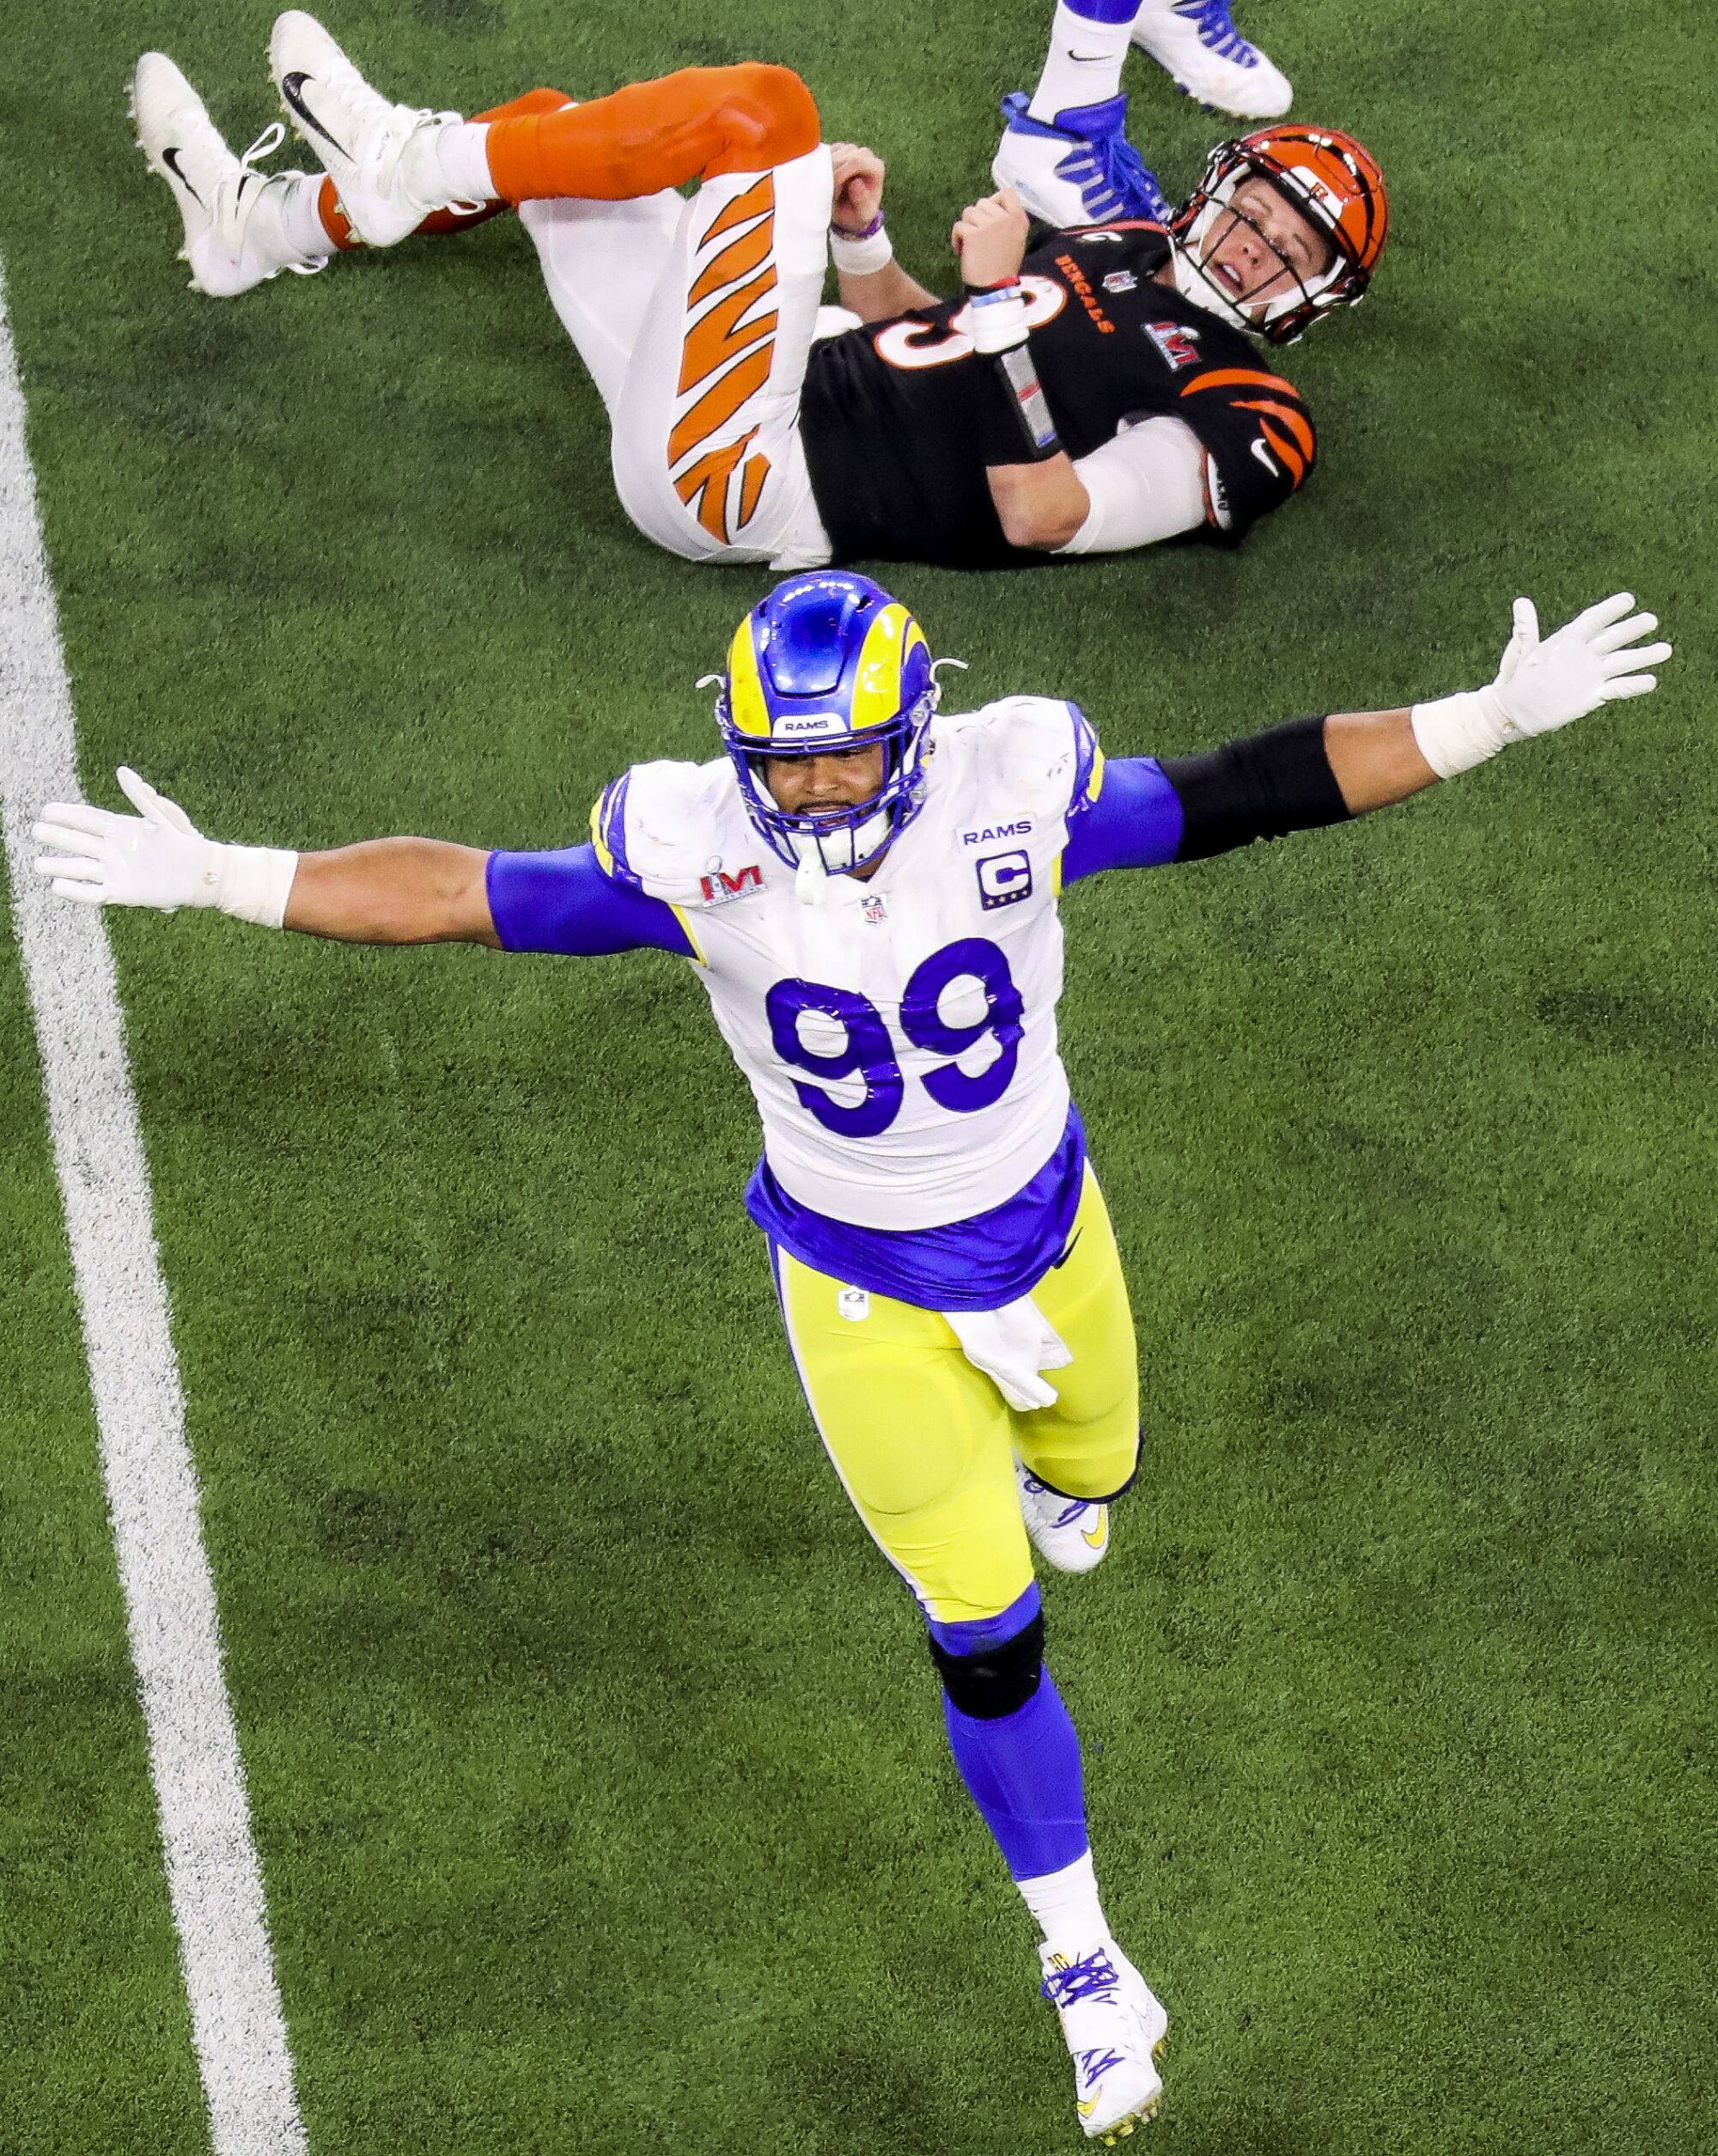 Los Angeles Rams defensive end Aaron Donald celebrated his tackle of Cincinnati Bengals quarterback Joe Burrow